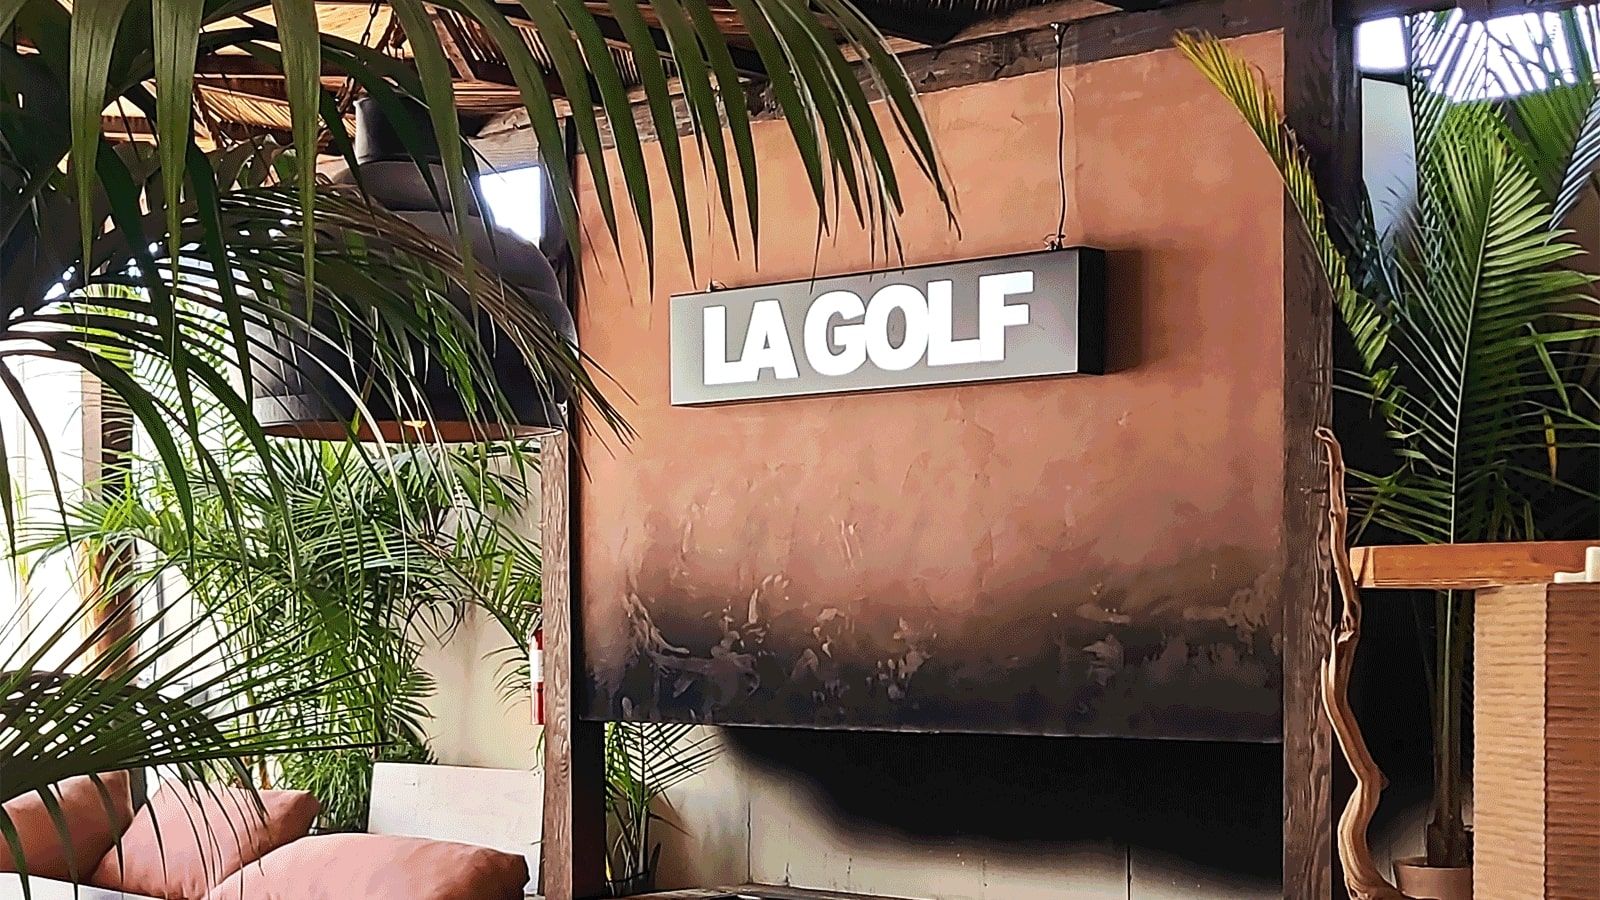 LA Golf light box sign mounted on the wall